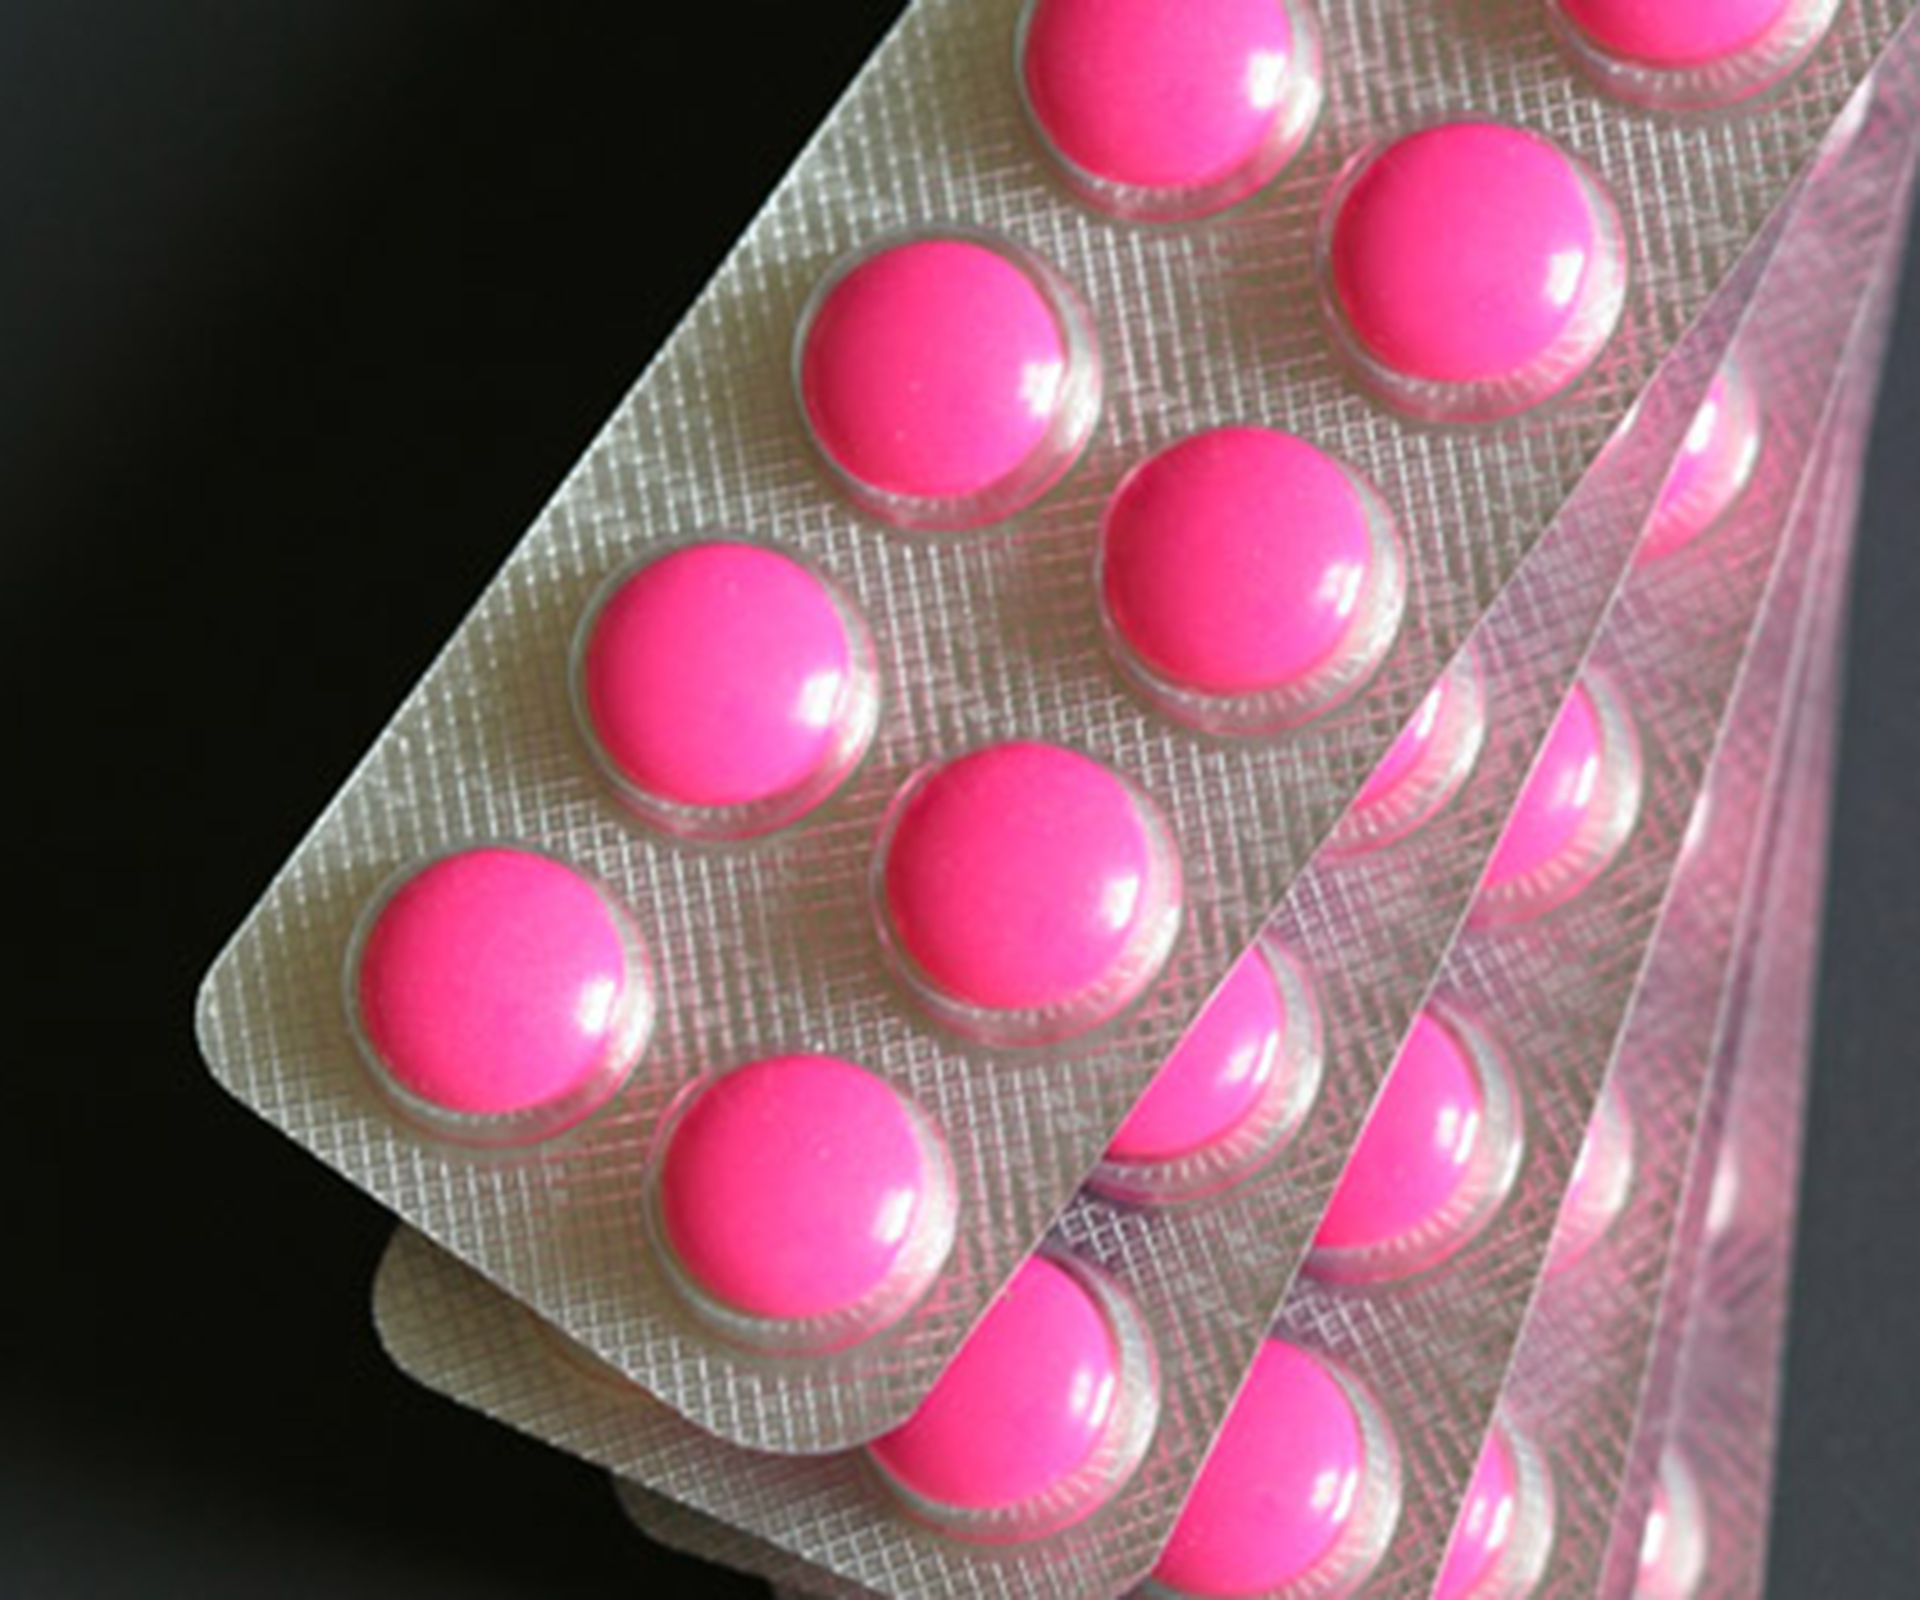 viagra pink tablets